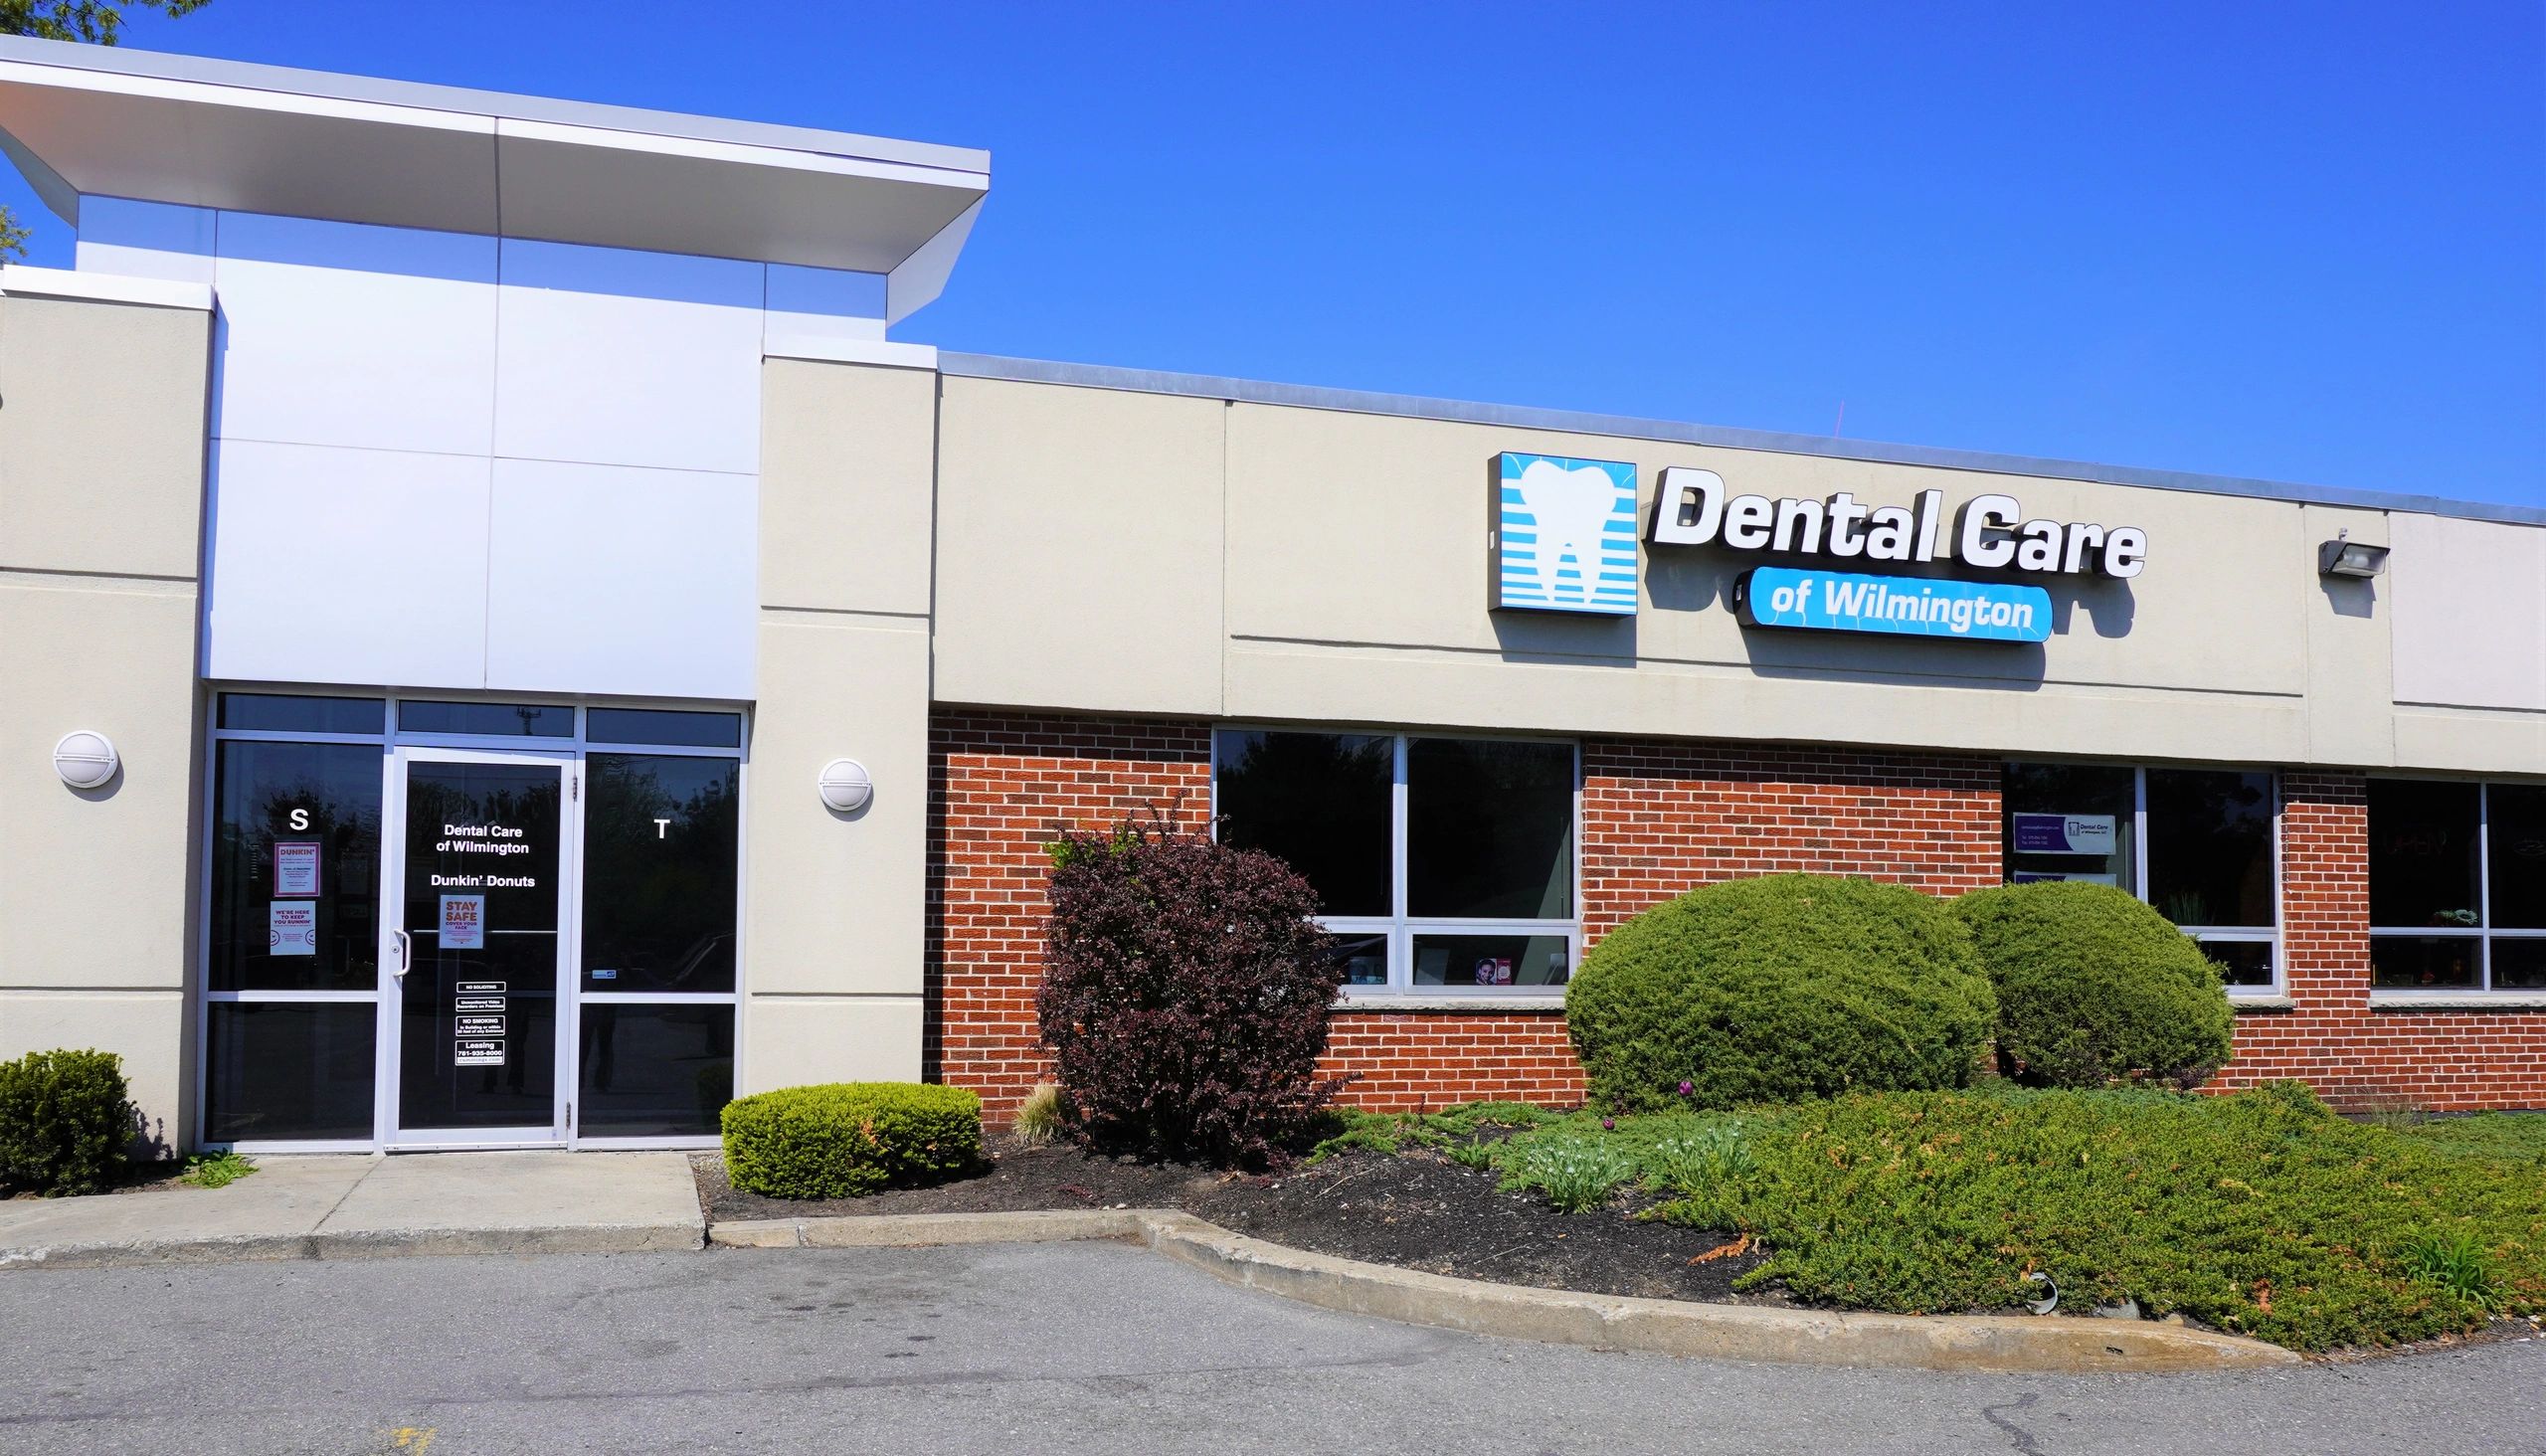 Dental Care of Wilmington - Dentist, Implants CEREC Crowns